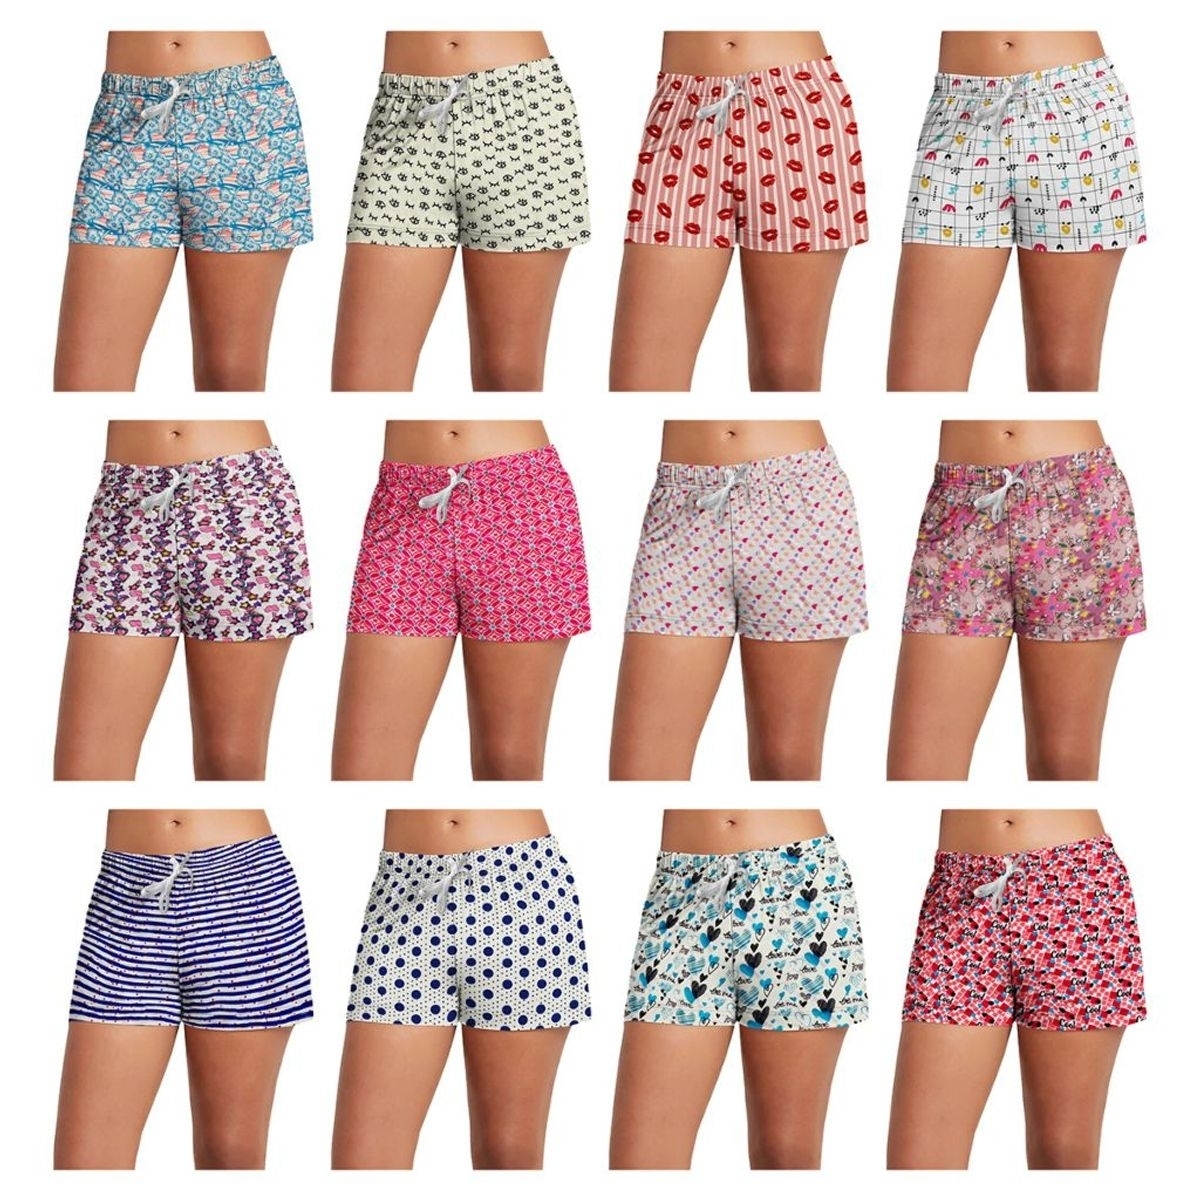 5-Pack: Women's Super-Soft Lightweight Fun Printed Comfy Lounge Bottom Pajama Shorts W/ Drawstring - Large, Love